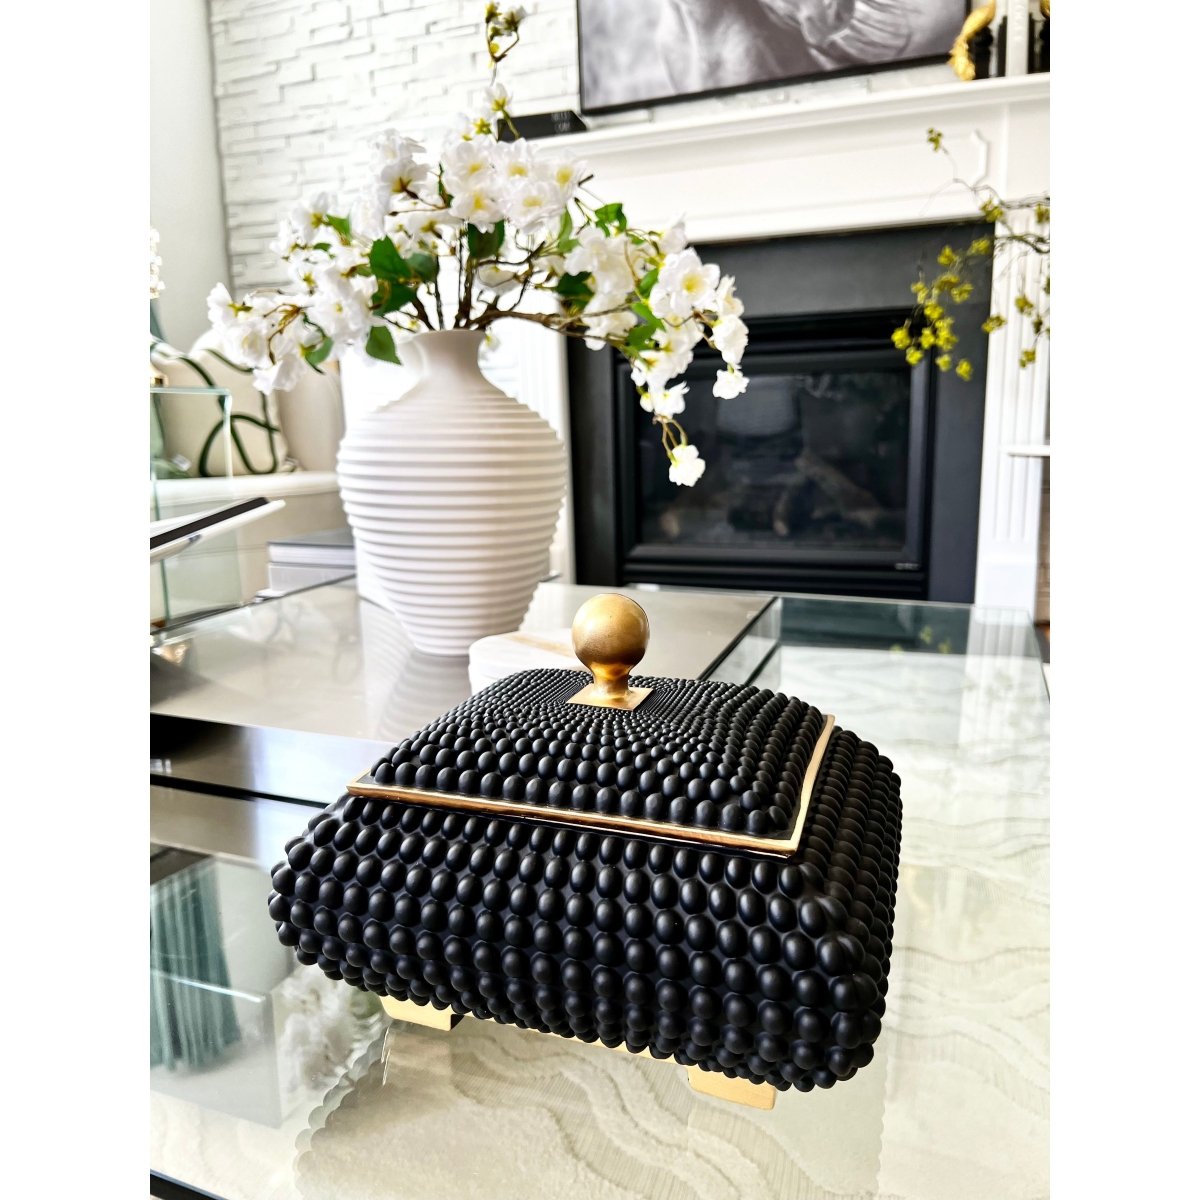 Decorative Boxes for sale  Elegant Home Decor – DesignedBy The Boss